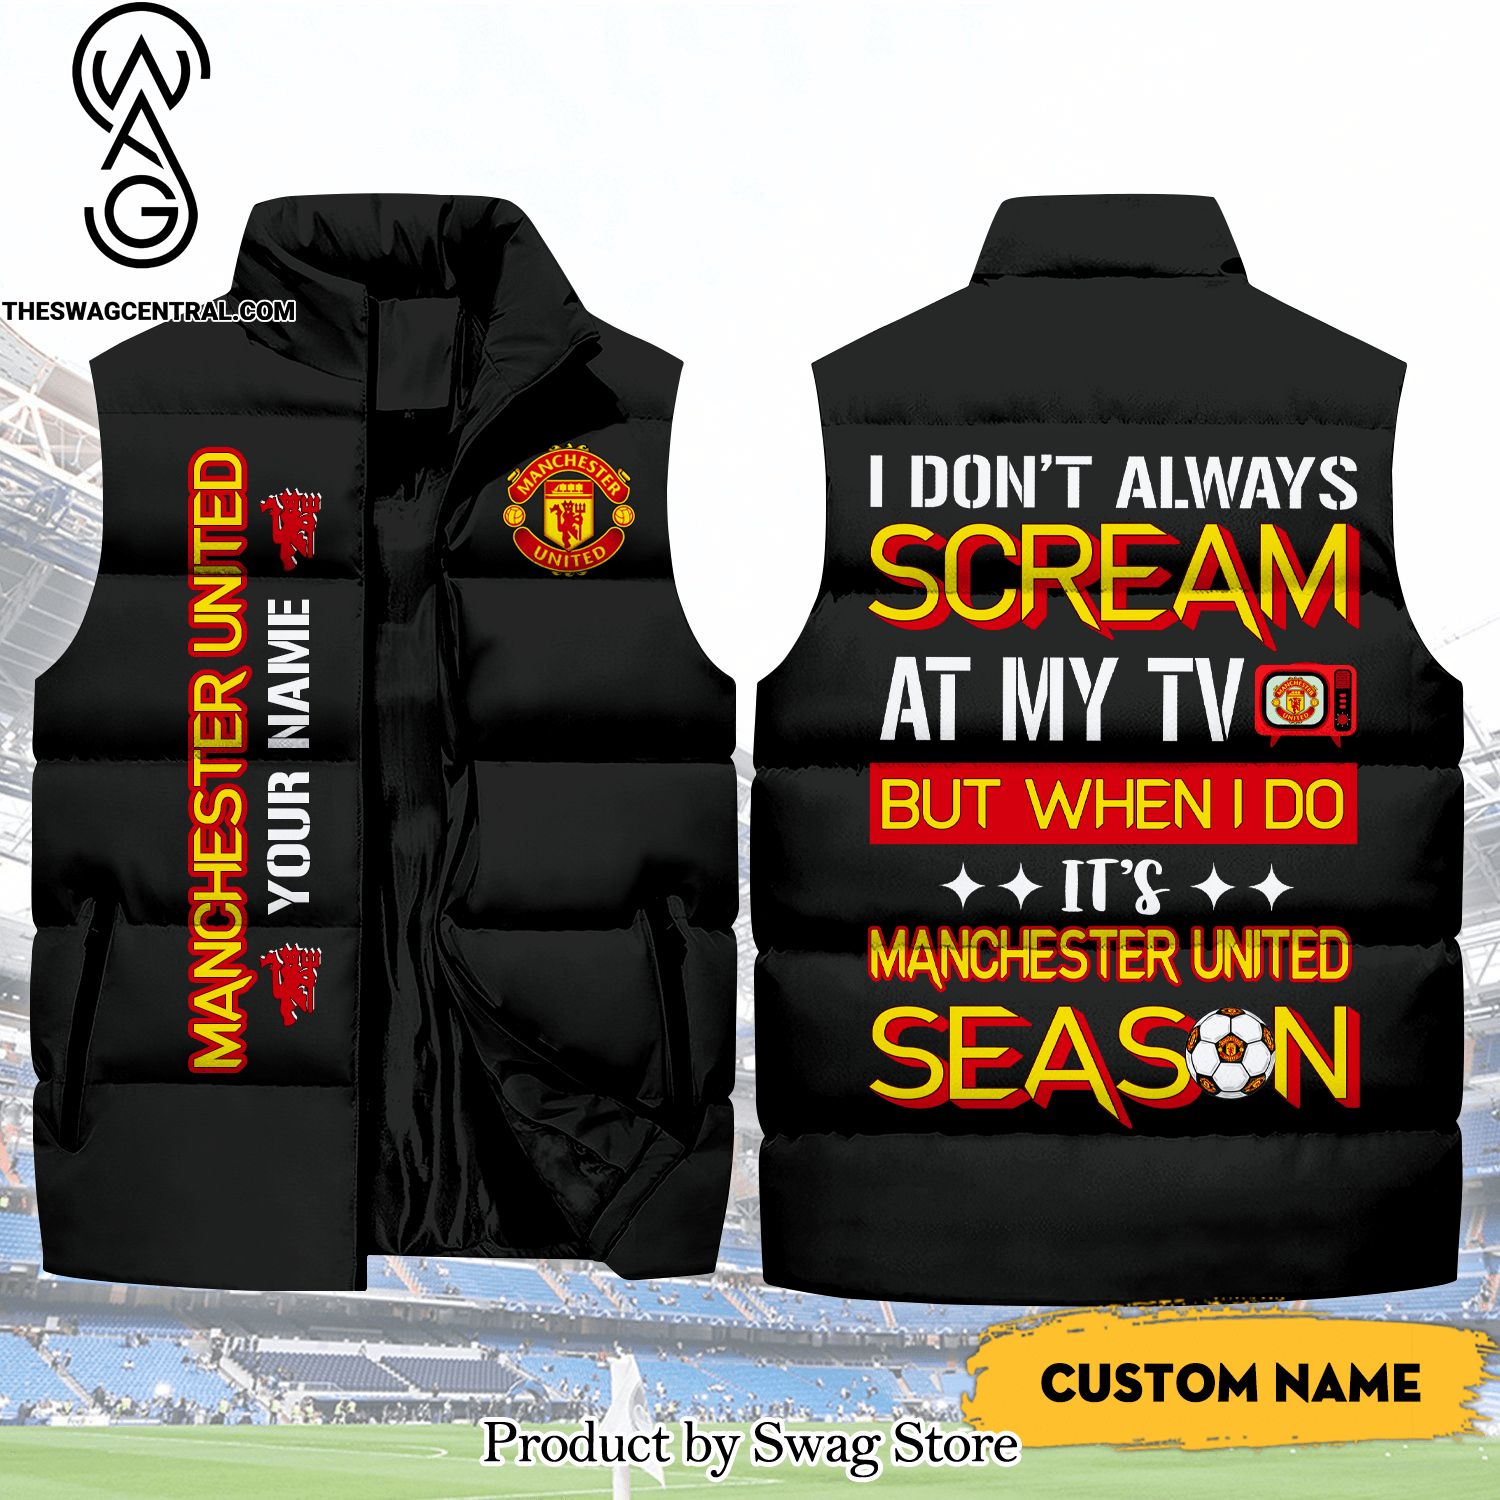 English Premier League Manchester United Season Classic Sleeveless Jacket